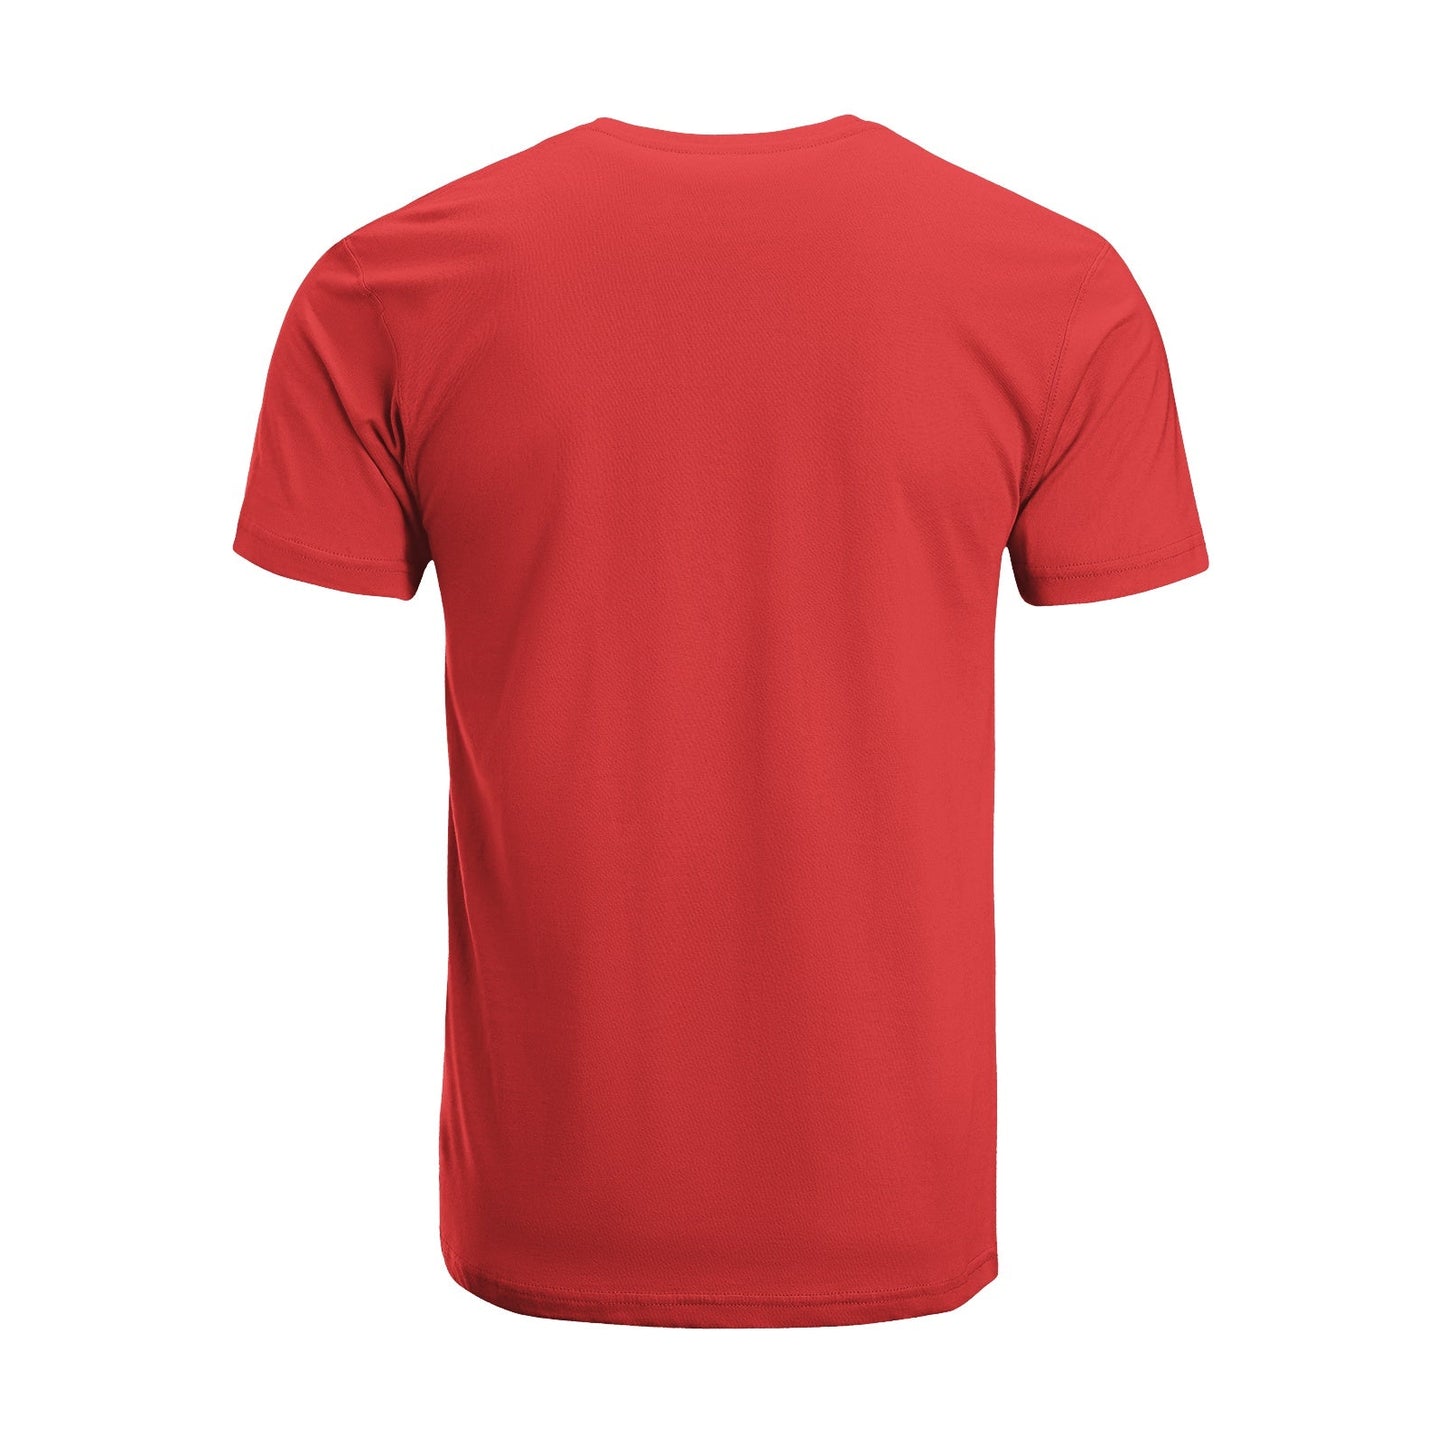 Unisex Short Sleeve Crew Neck Cotton Jersey T-Shirt USA 12